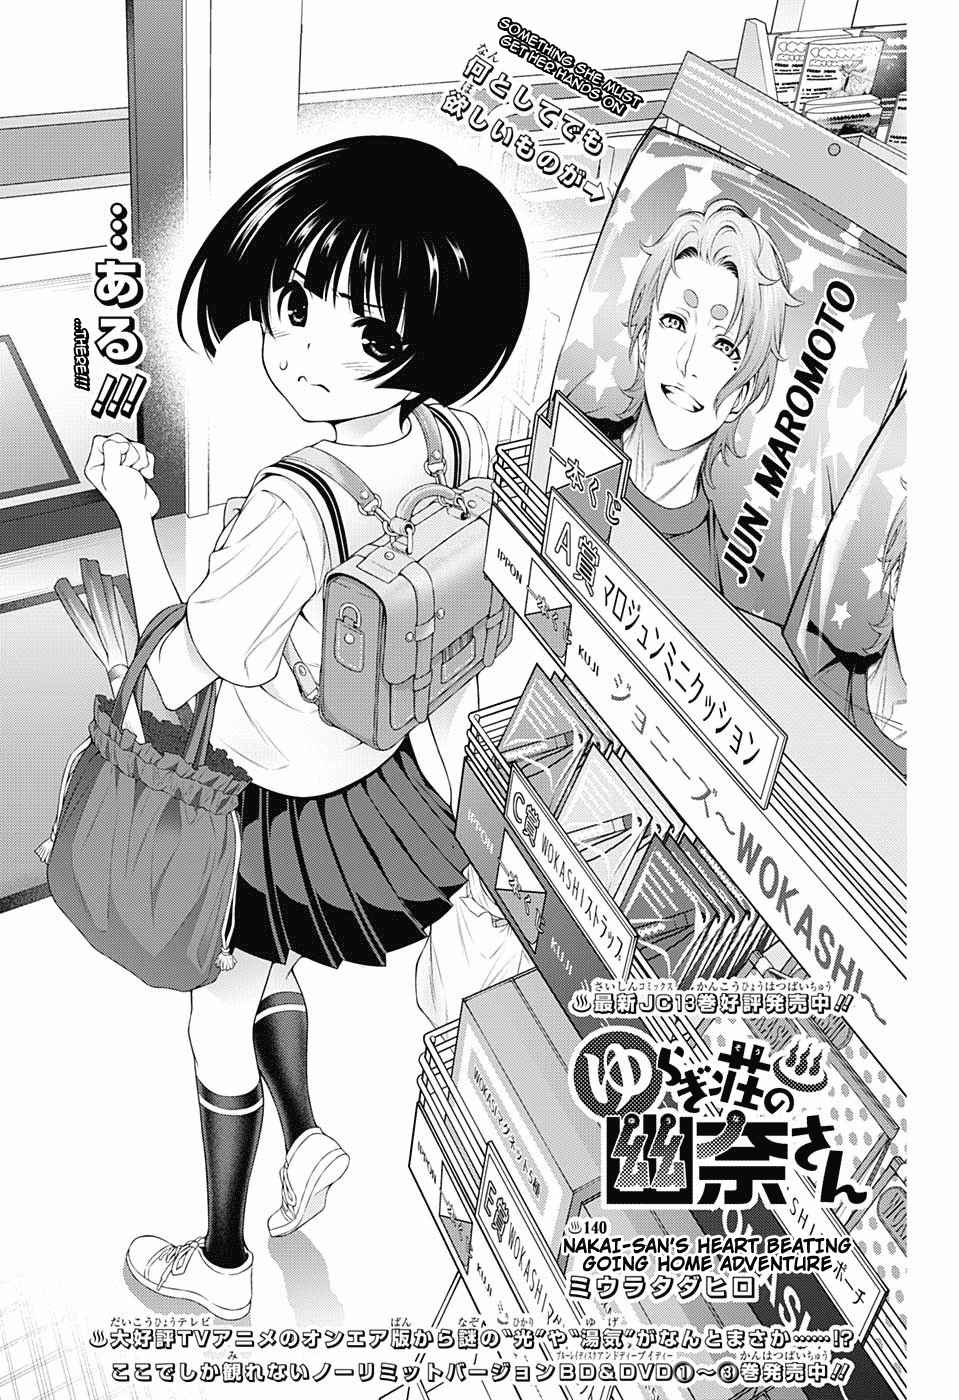 Yuragi sou no Yuuna san Vol. 16 Ch. 140 Nakai san's Heart Beating Going Home Adventure